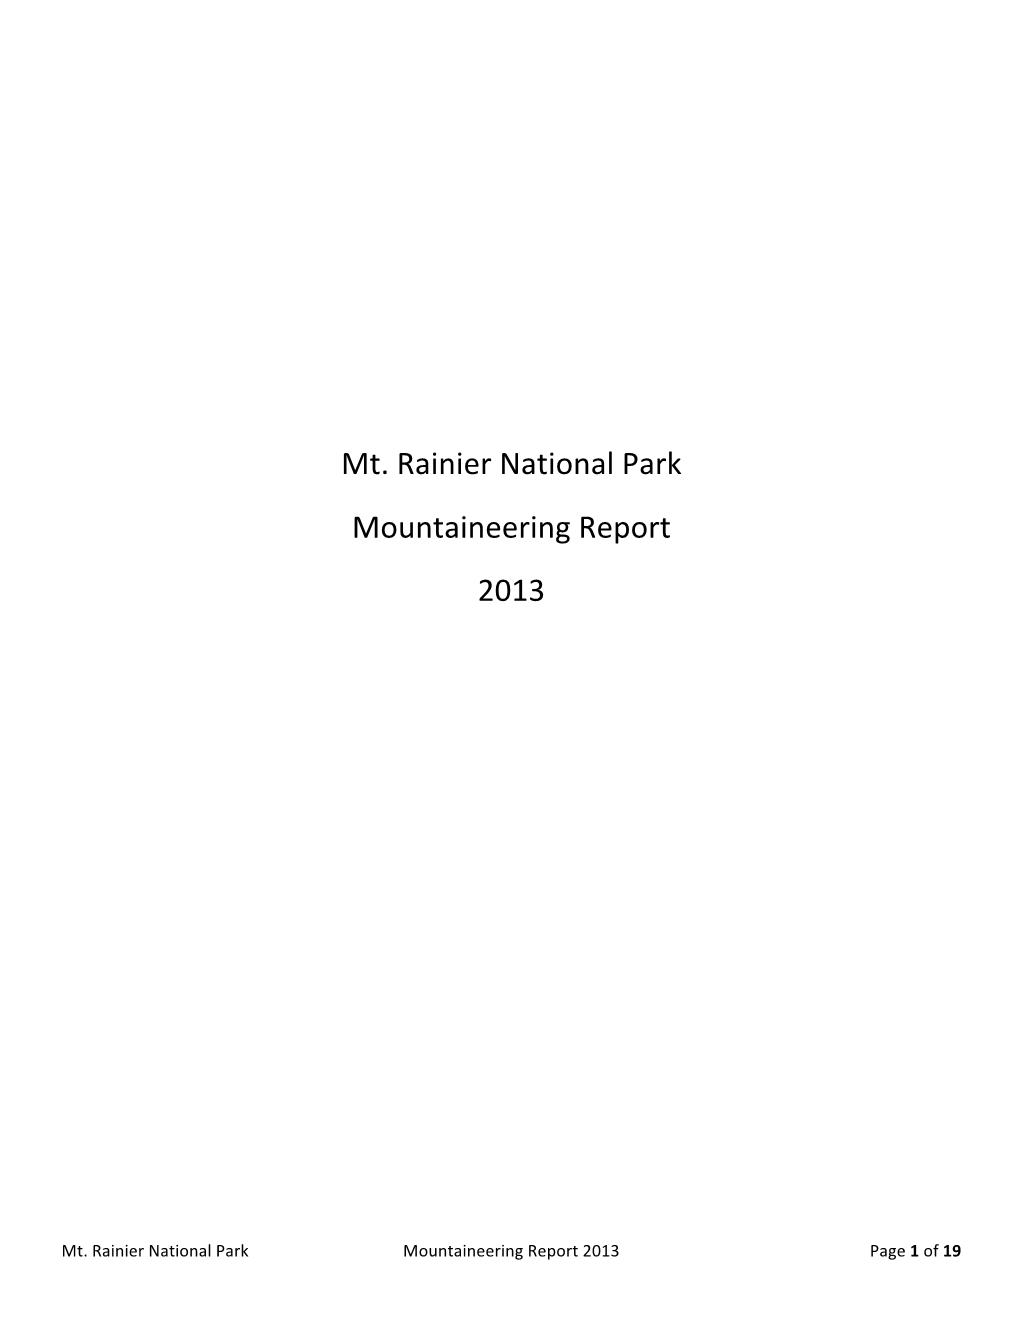 Mt. Rainier National Park Mountaineering Report